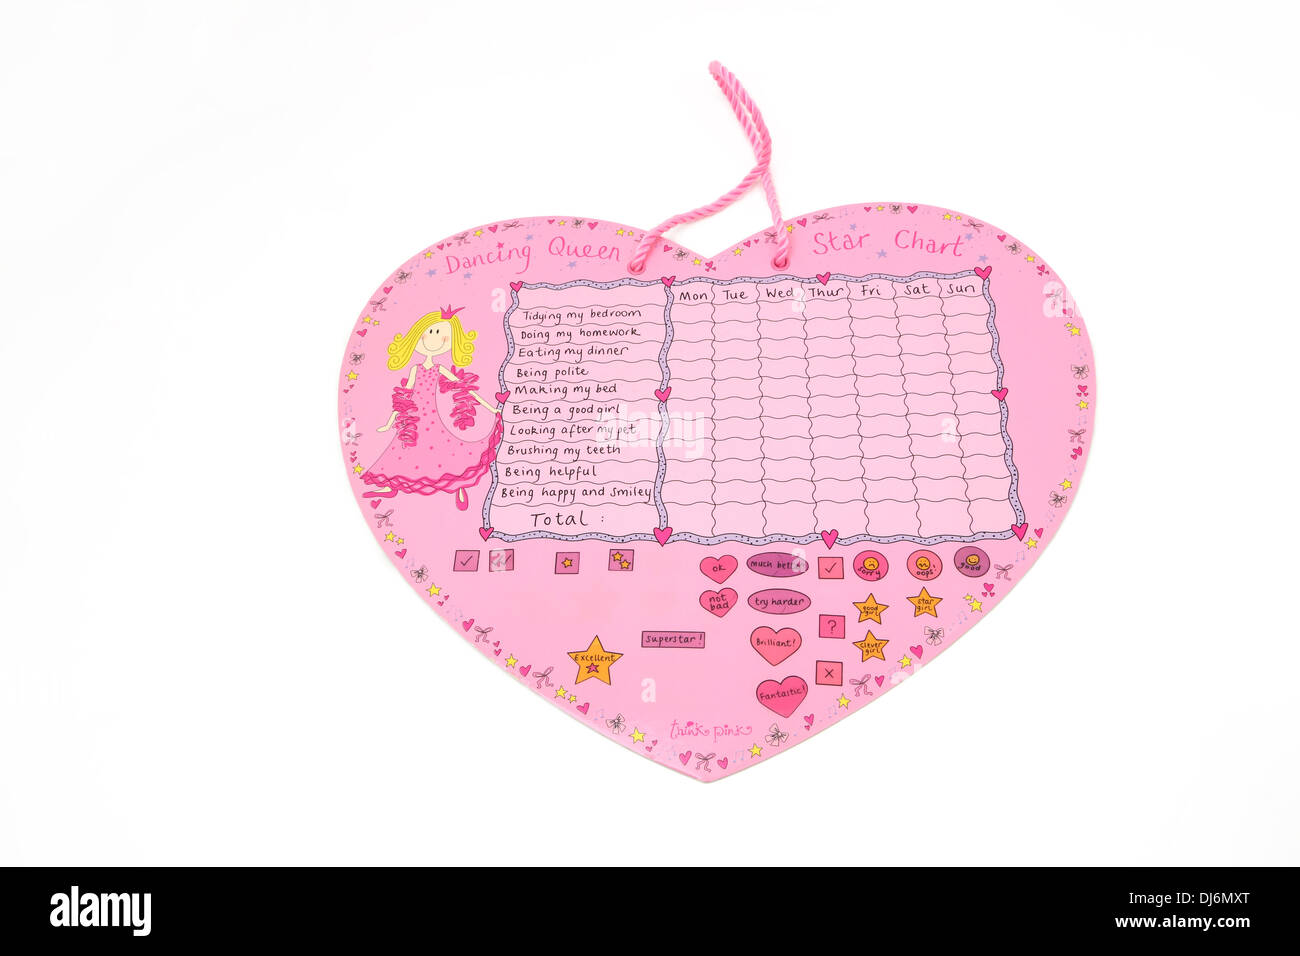 Dancing Queen Heart Shape Star Chart Stock Photo